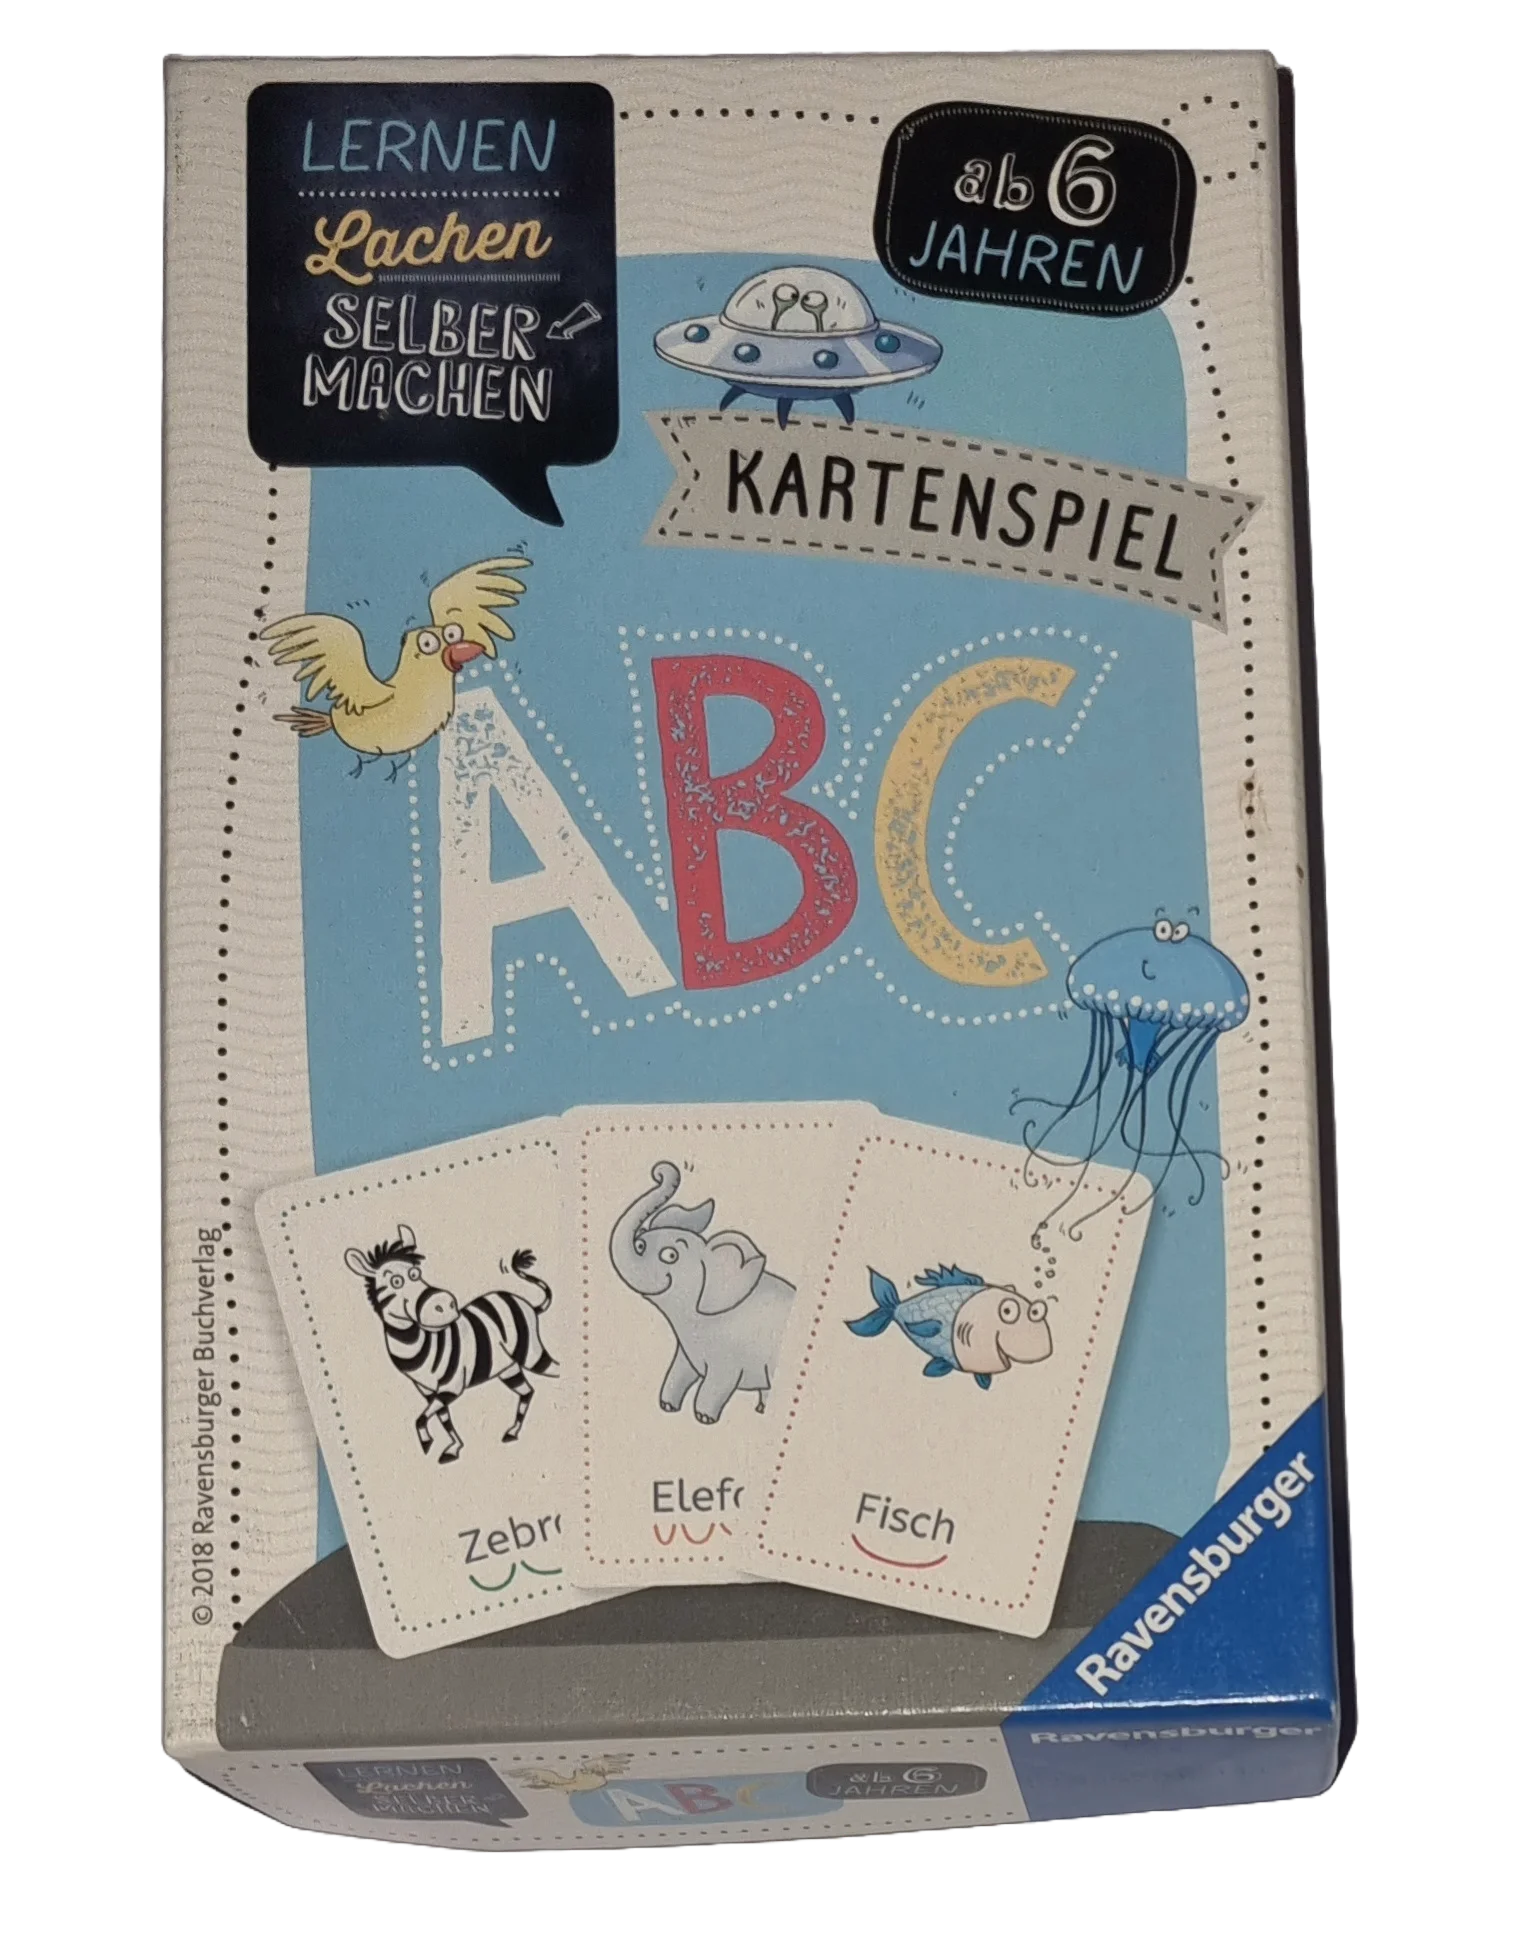 Ravensburger Lernen Lachen selber machen Kartenspiel ABC